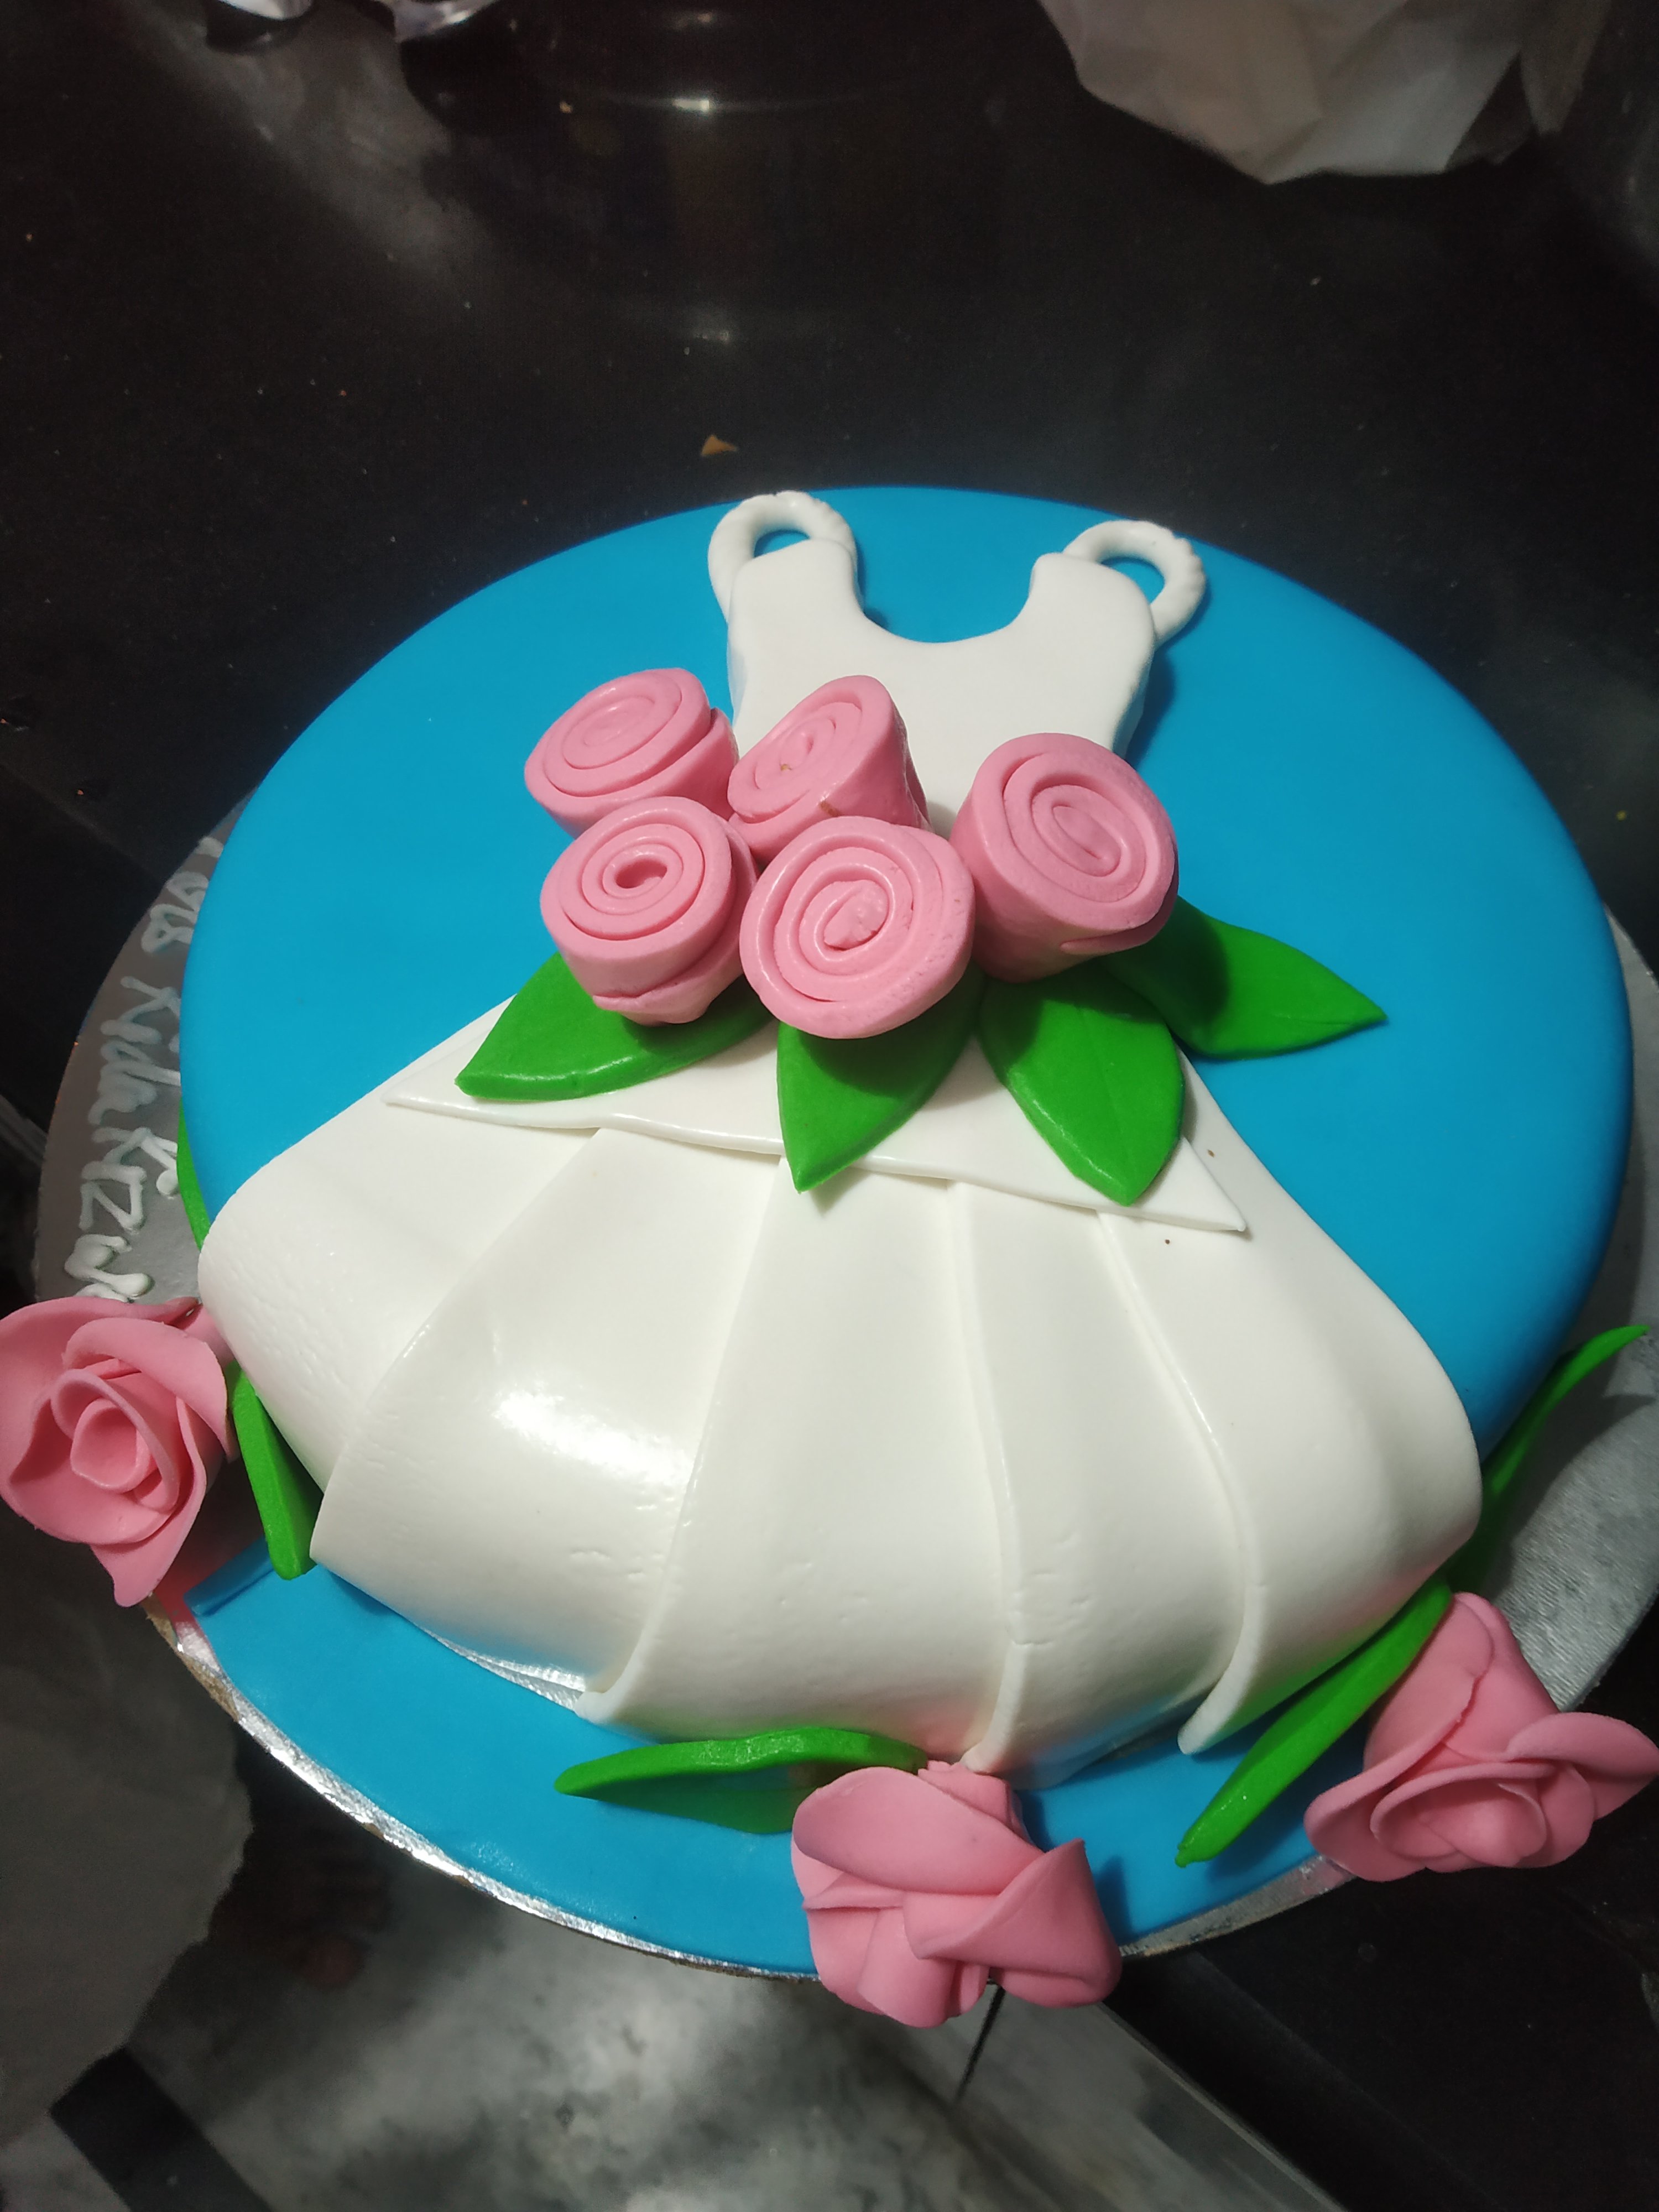 Bride to Be Cake Design & Price | YummyCake